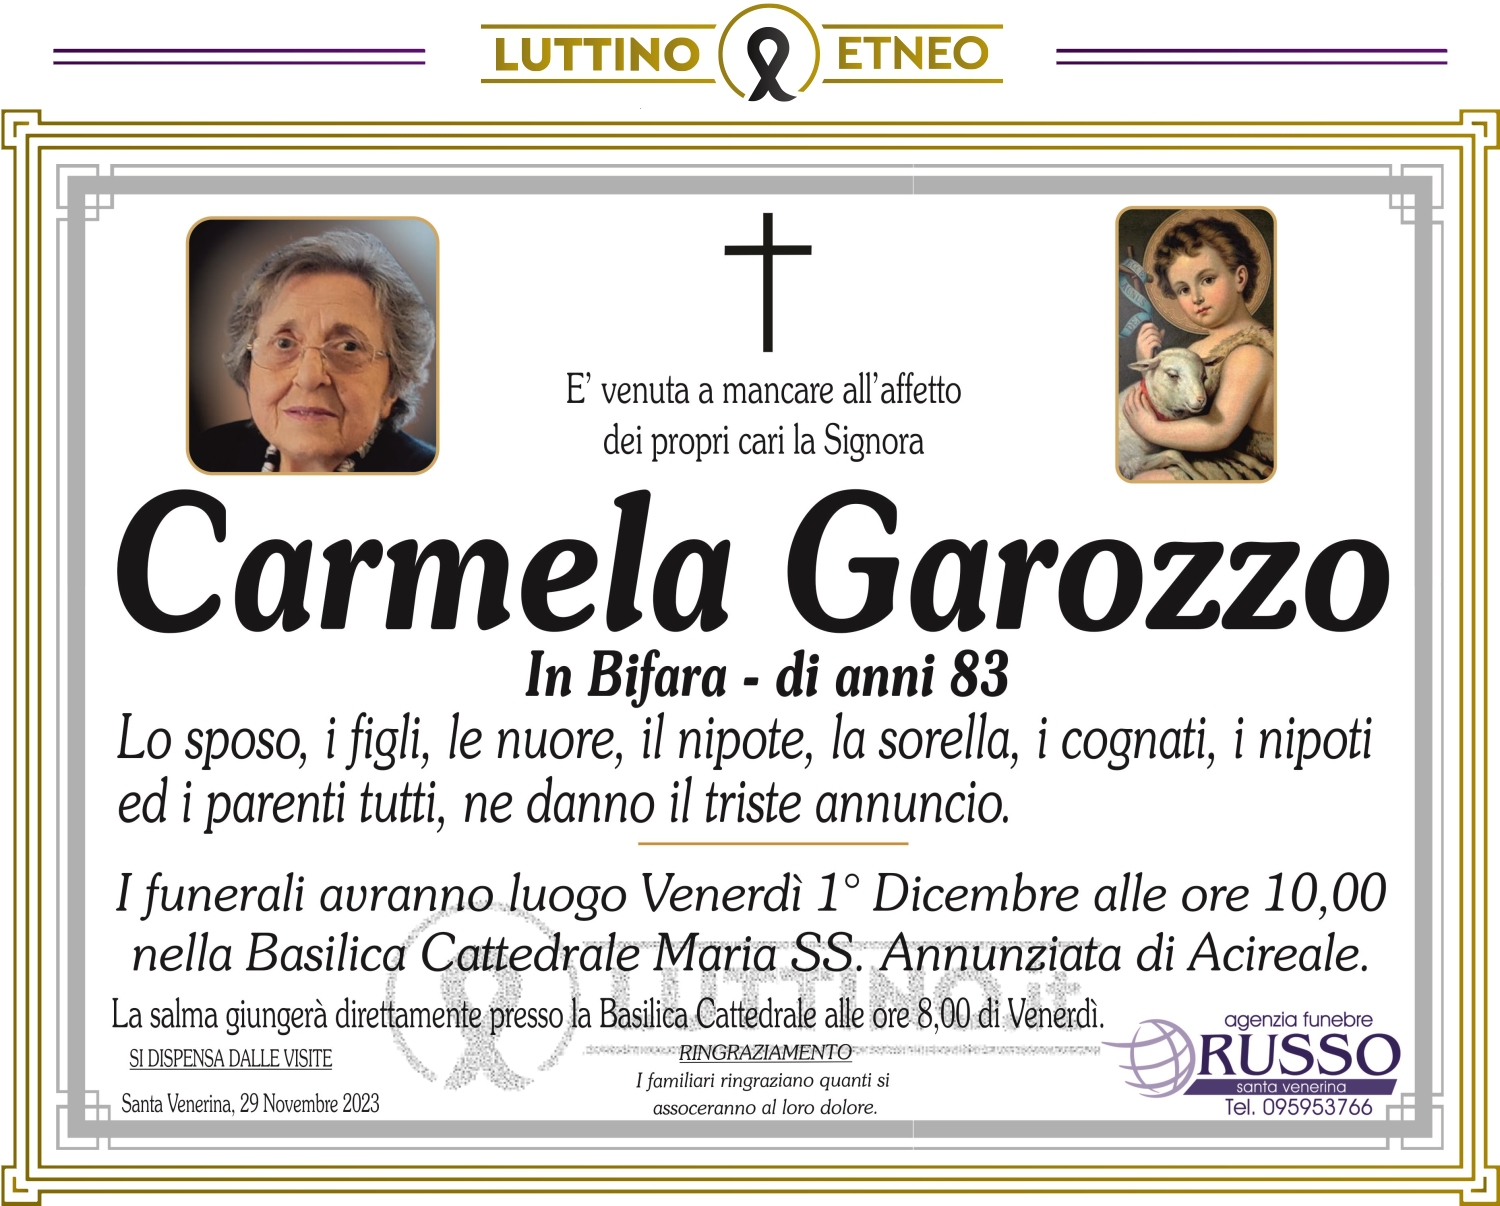 Carmela Garozzo